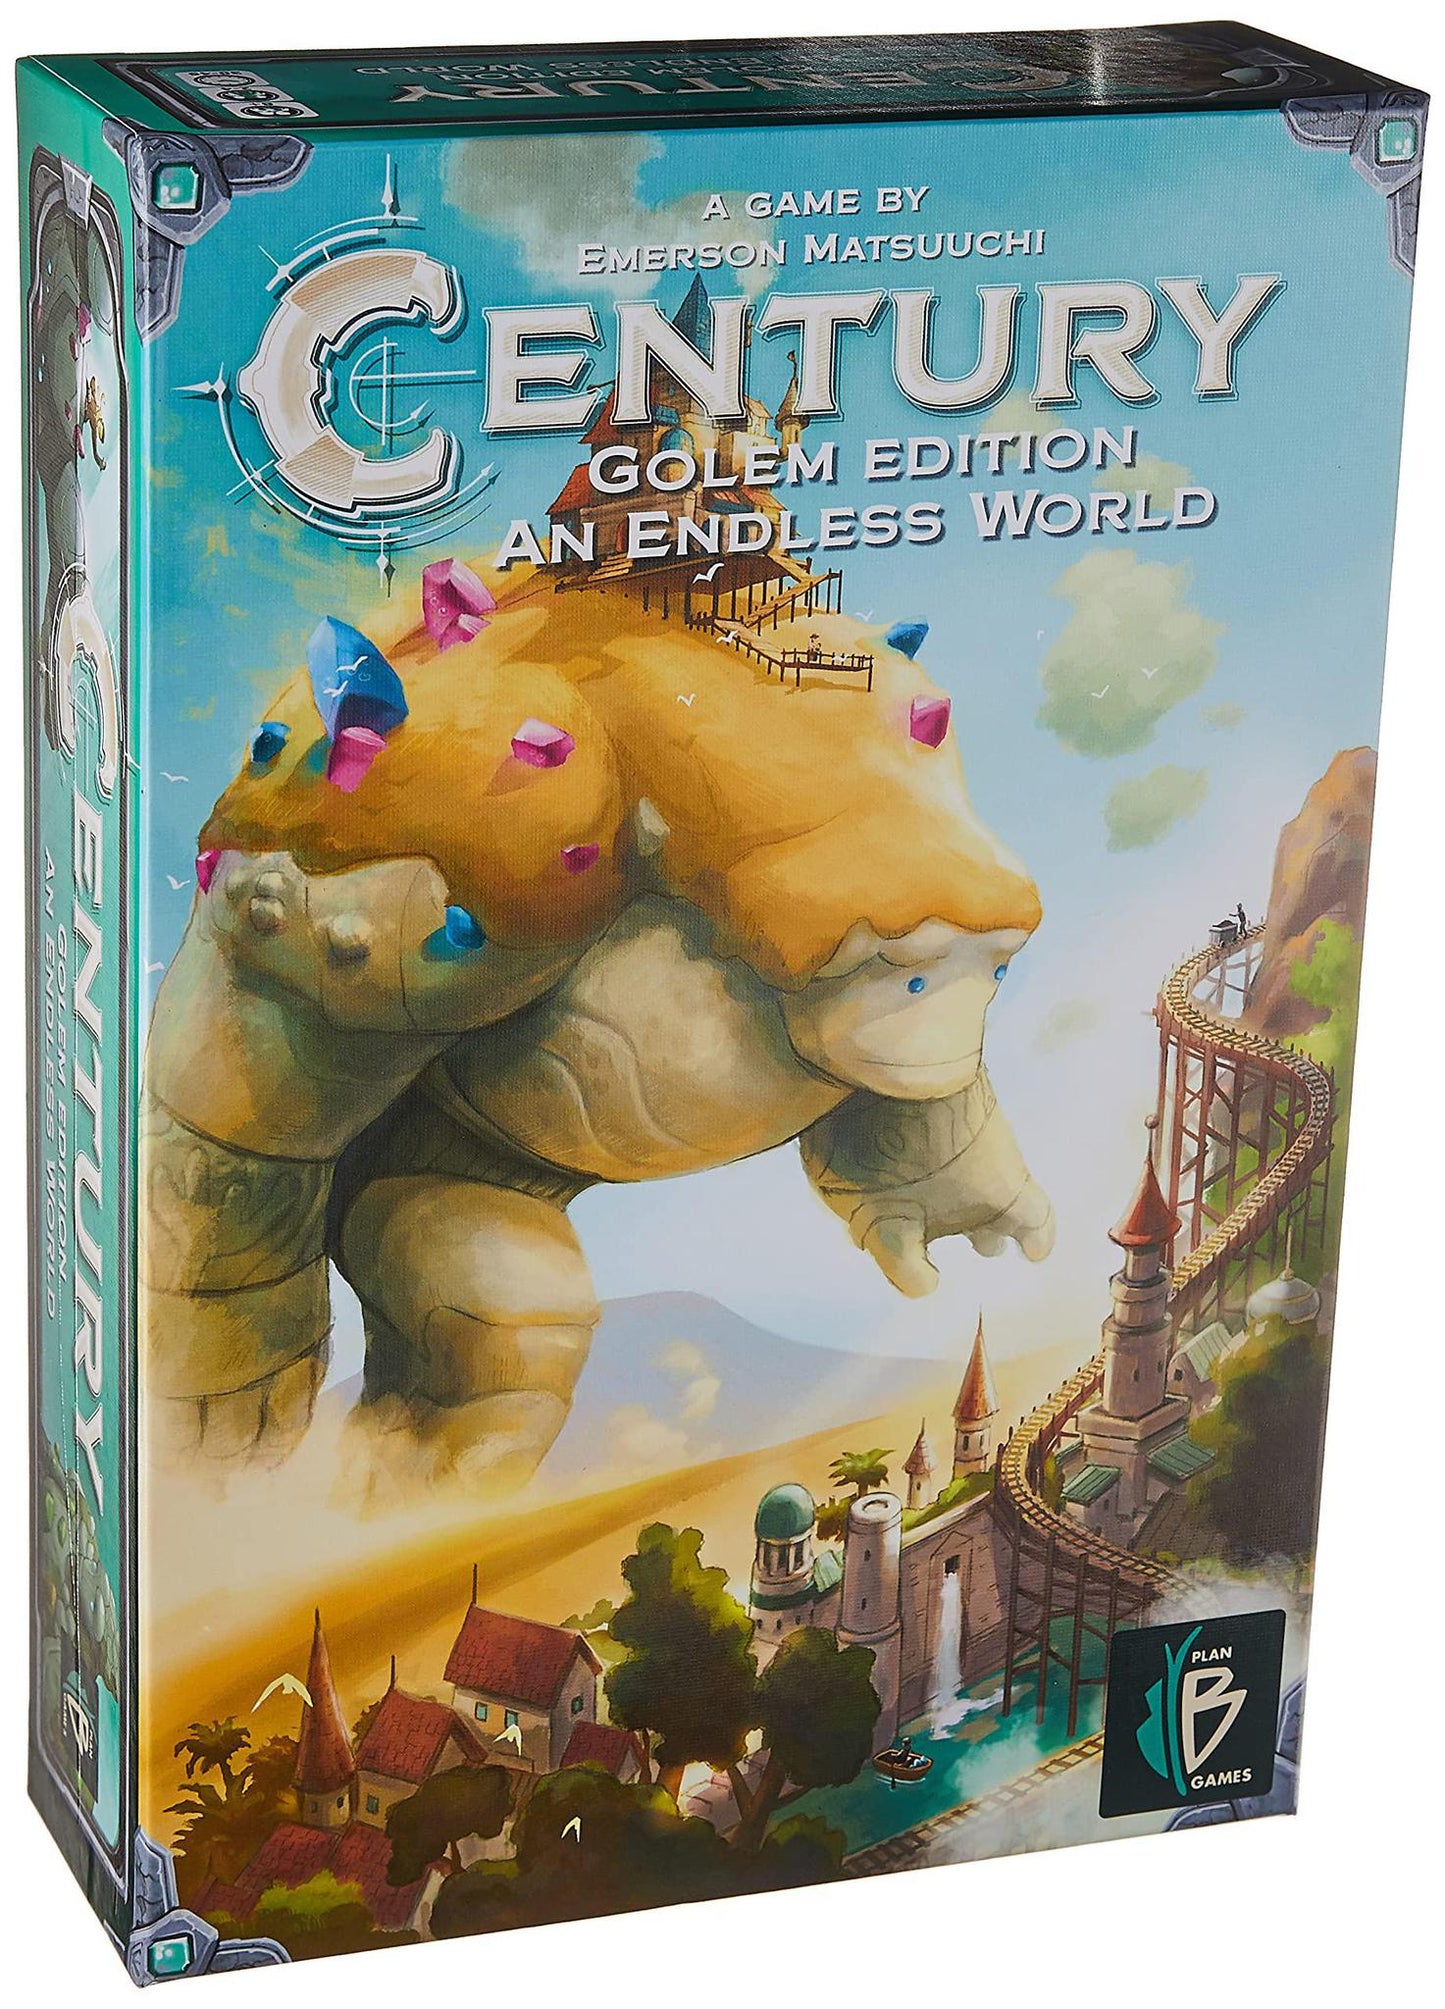 Century Golem Edition Endless World